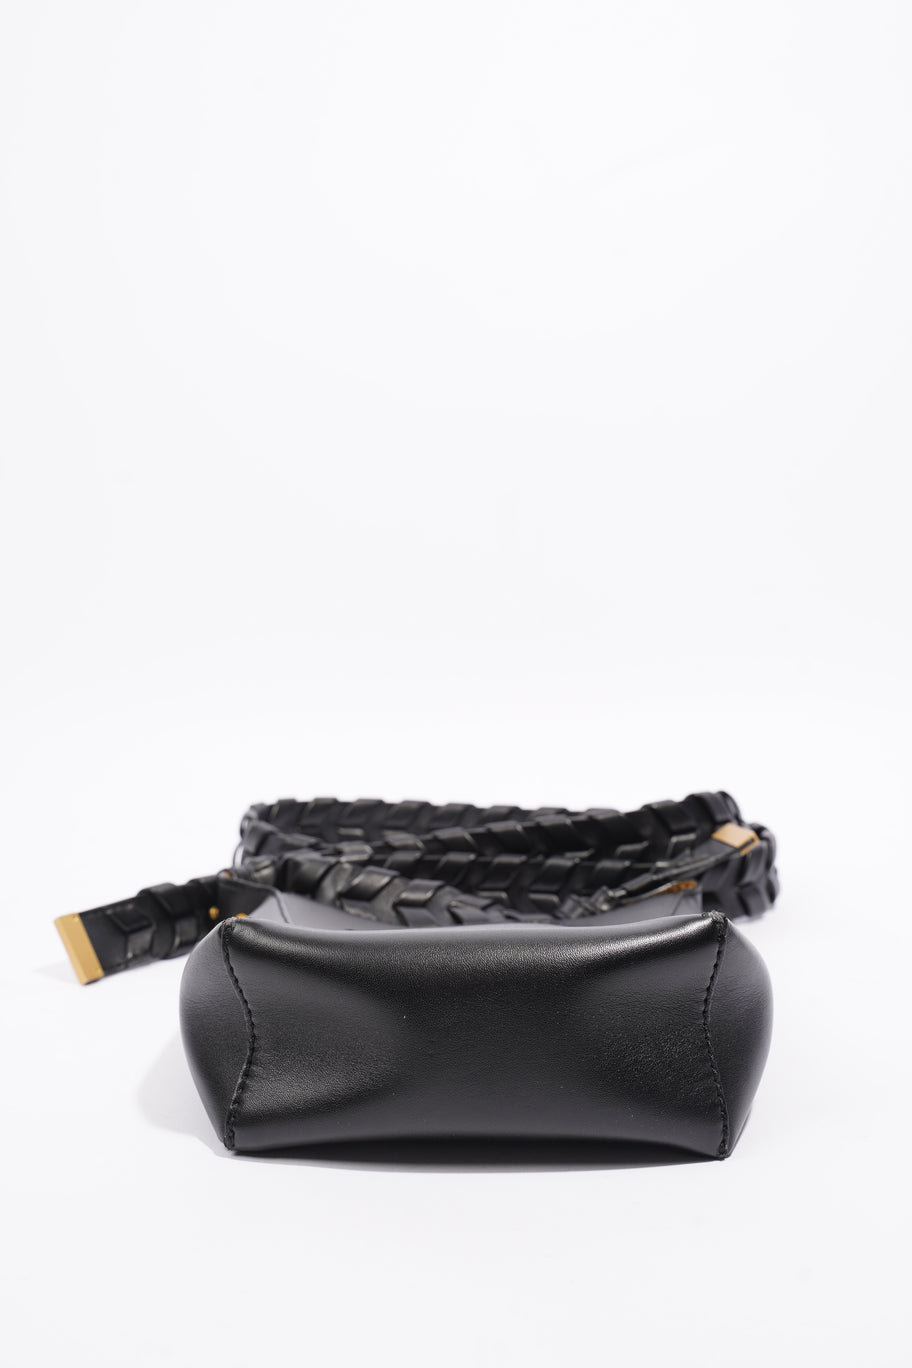 Small Hobo Black Leather Image 6